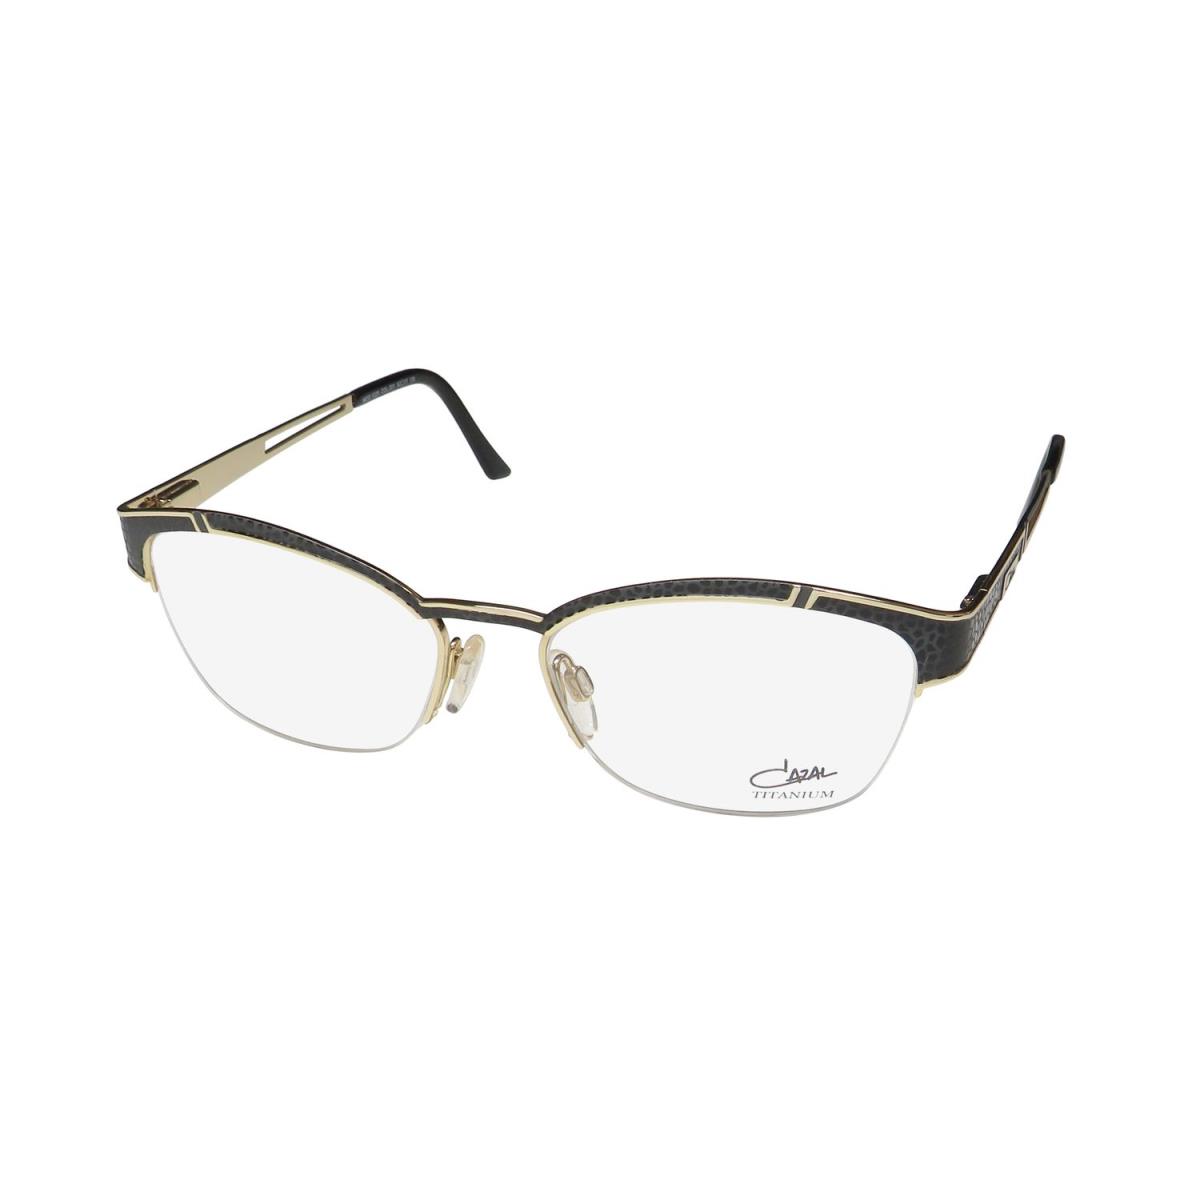 Cazal 1229 Cat Eye Titanium Made IN Germany Hot Eyeglass Frame/glasses Black / Gold